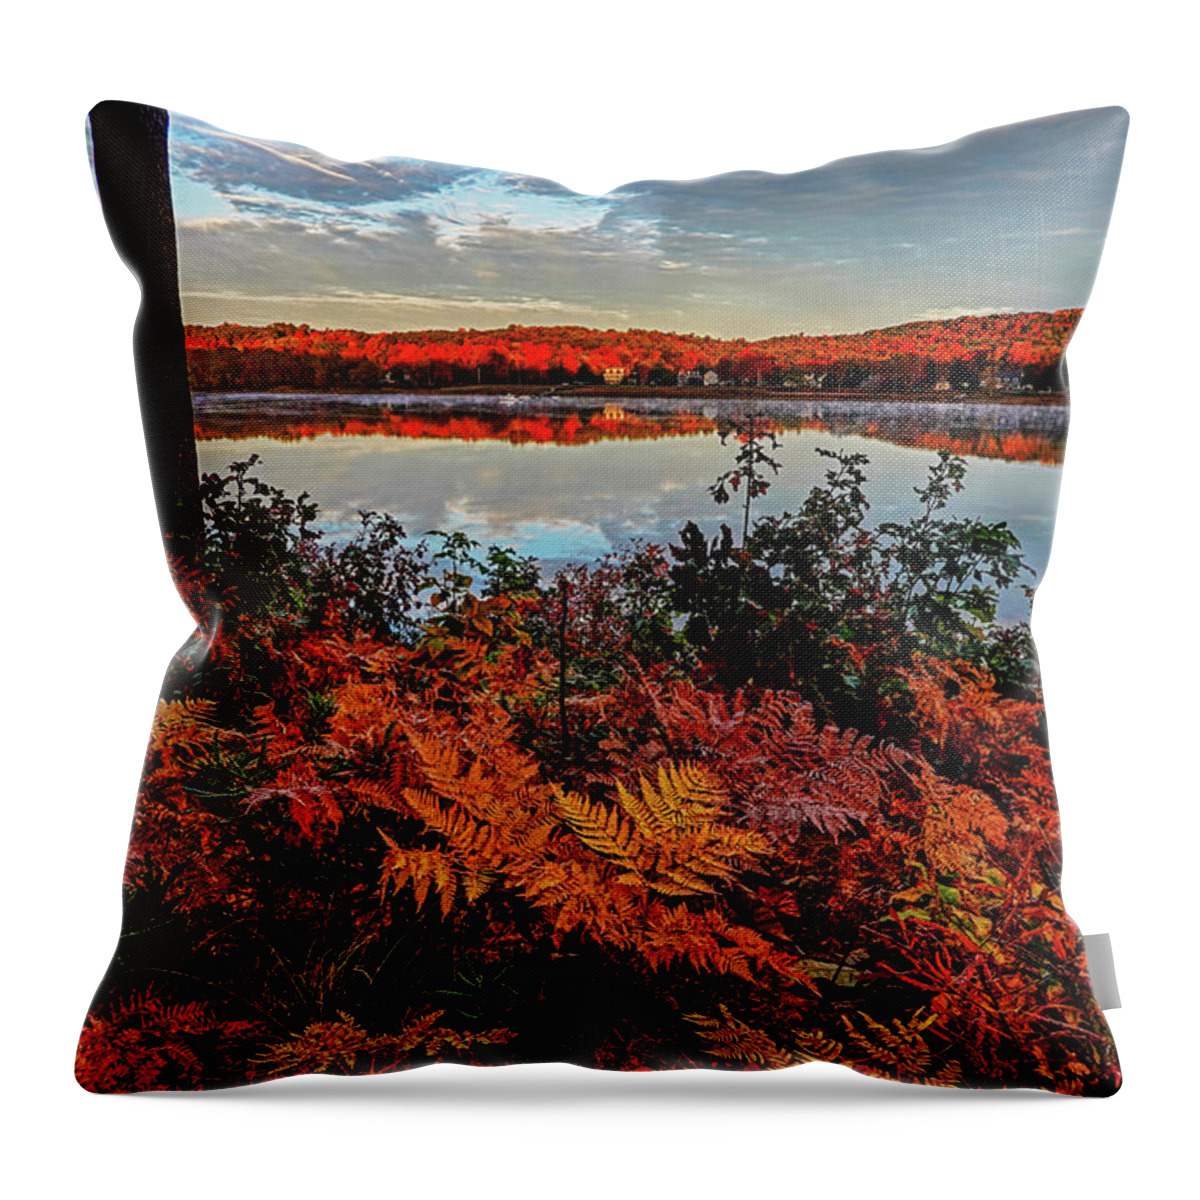 Newburyport Throw Pillow featuring the photograph Newburyport MA Maudslay State Park Fall Foliage Sunrise Merrimack River Reflection Ferns by Toby McGuire